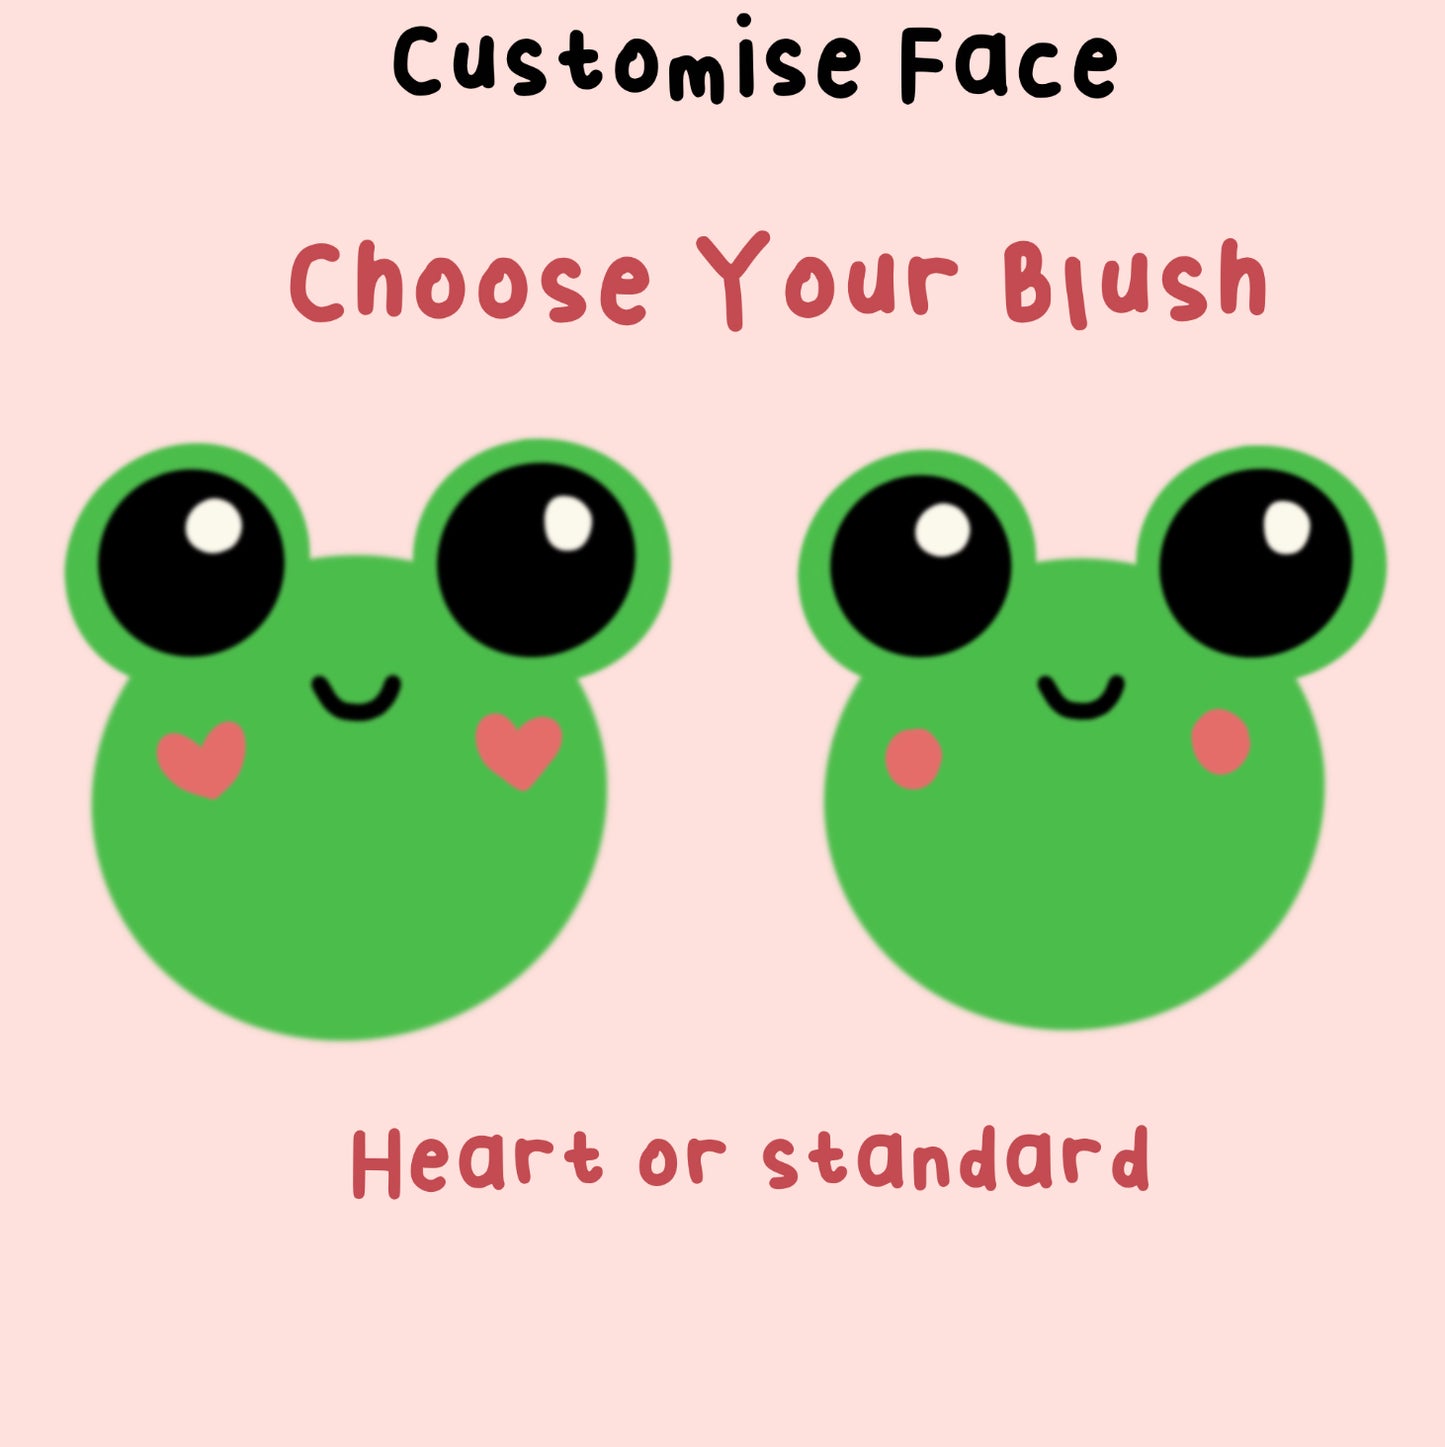 Pick Your Blush